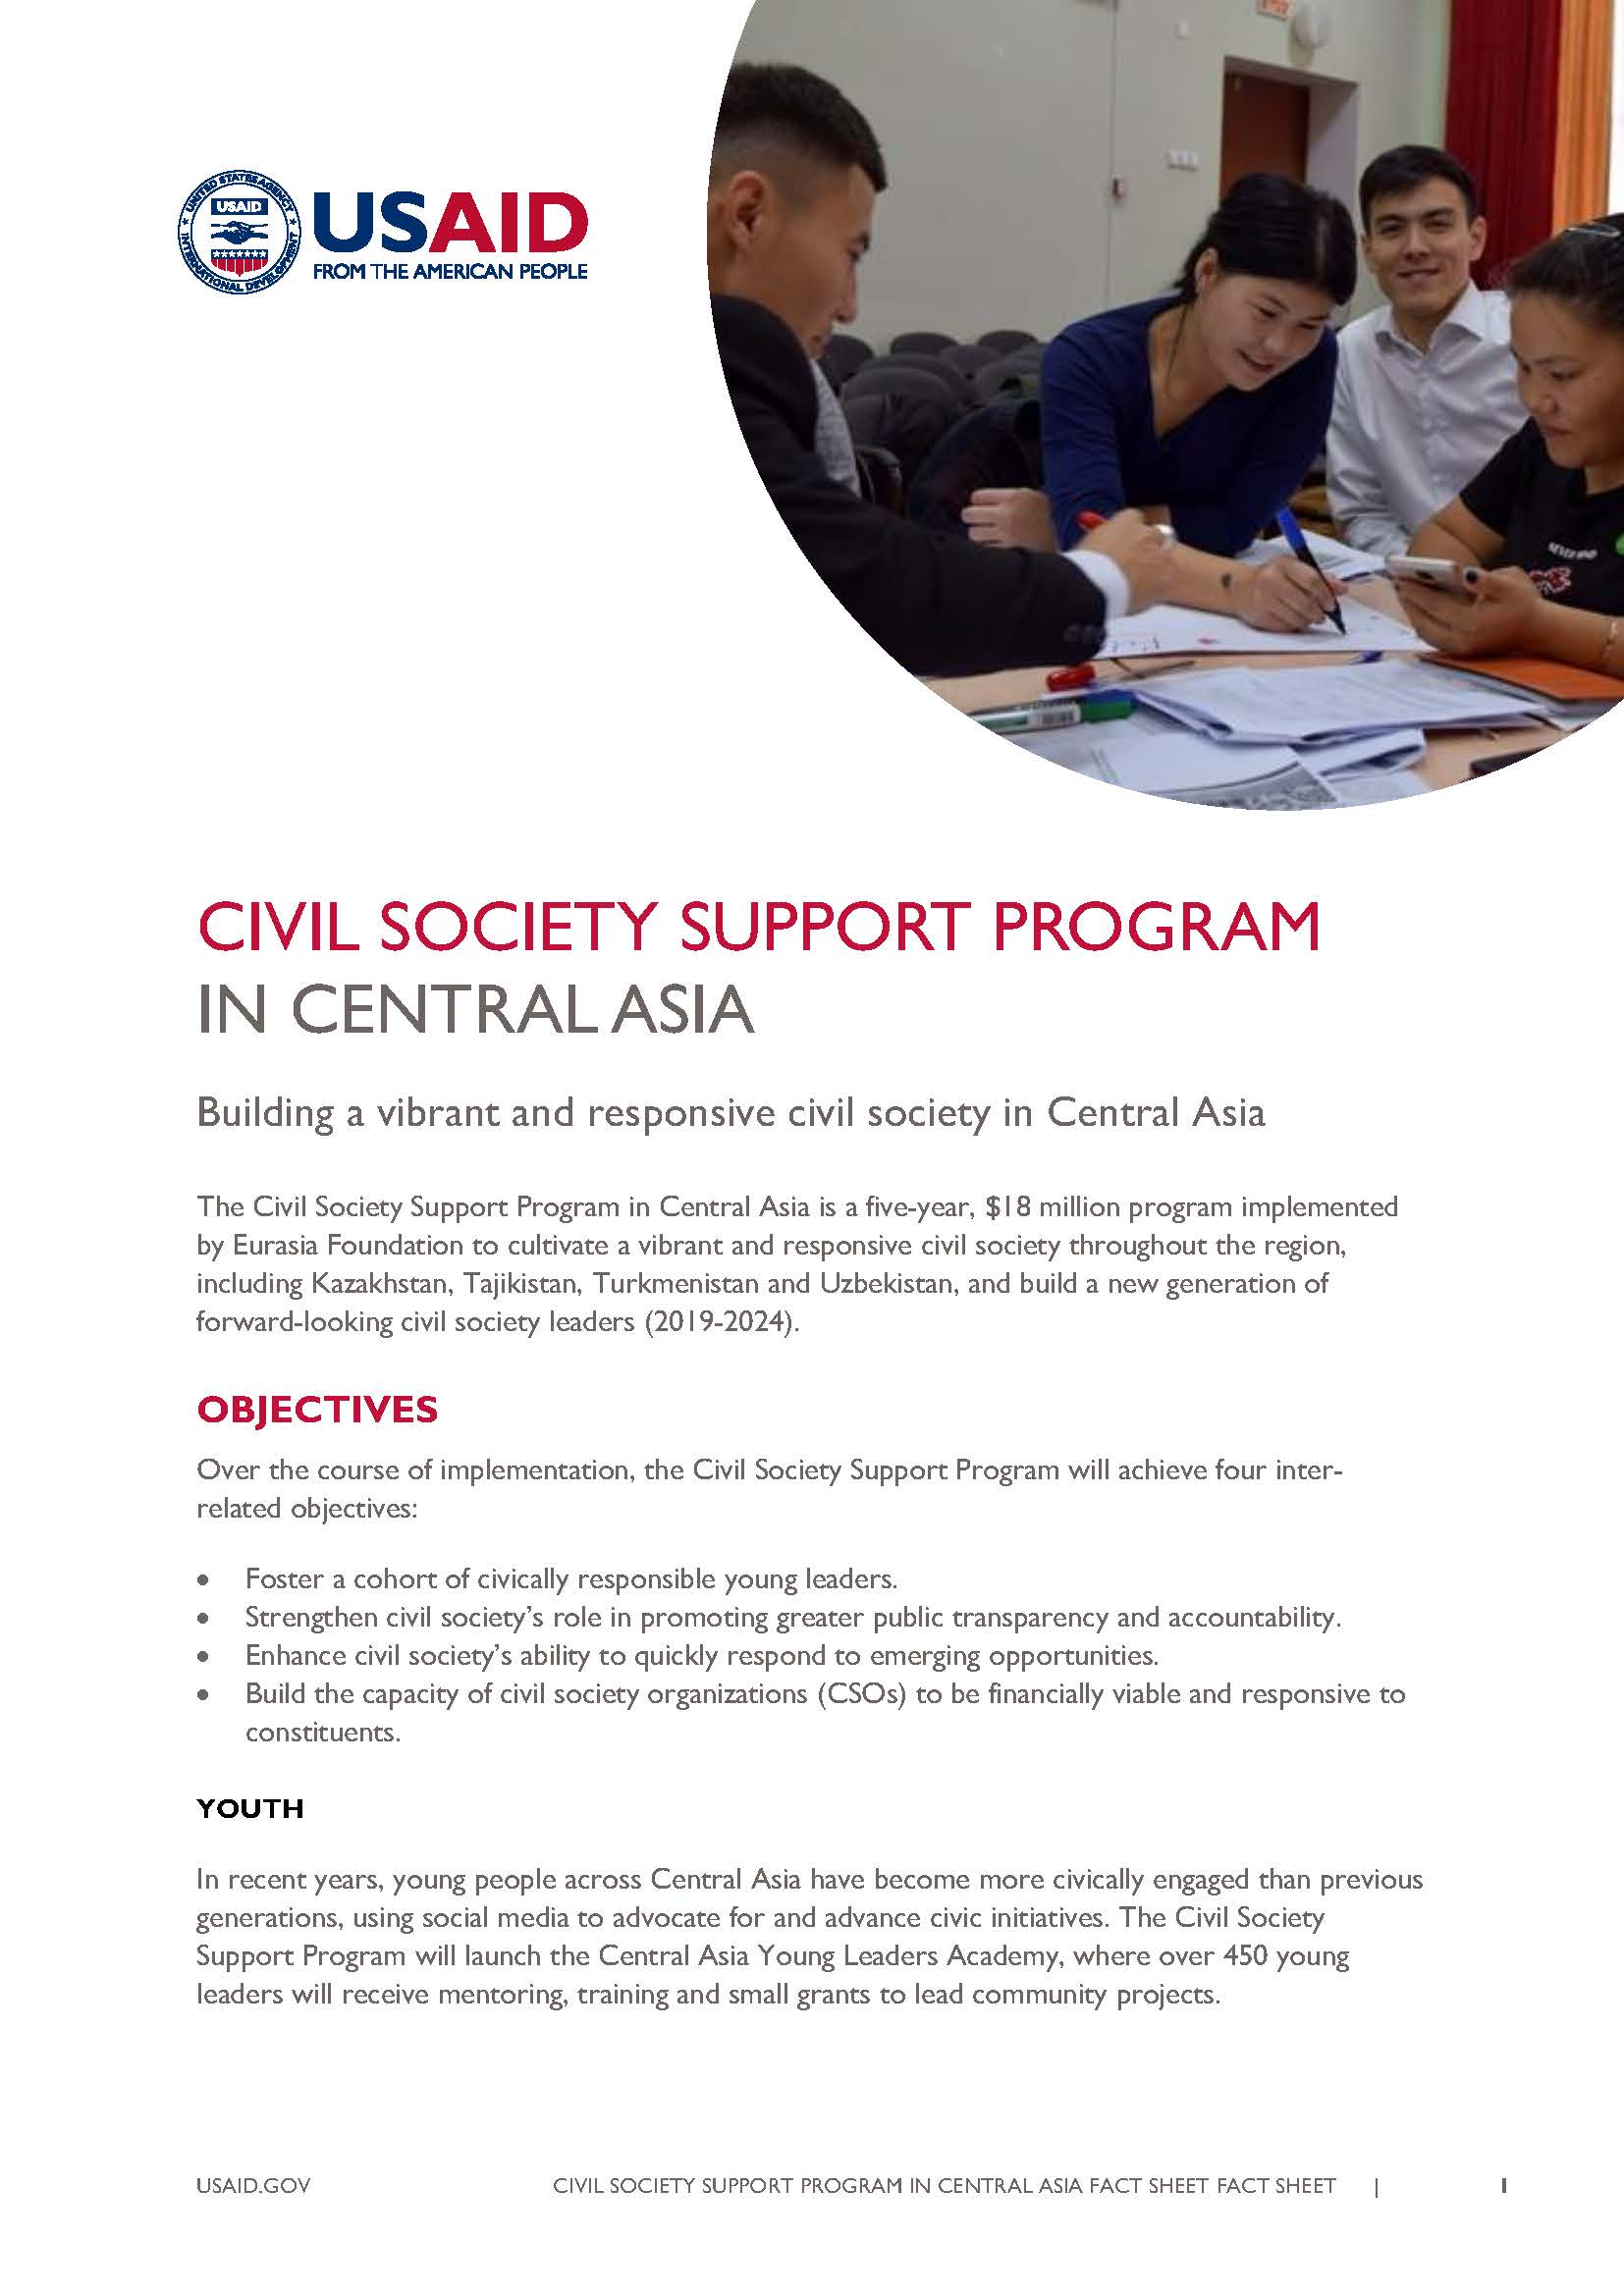 The Civil Society Support Program